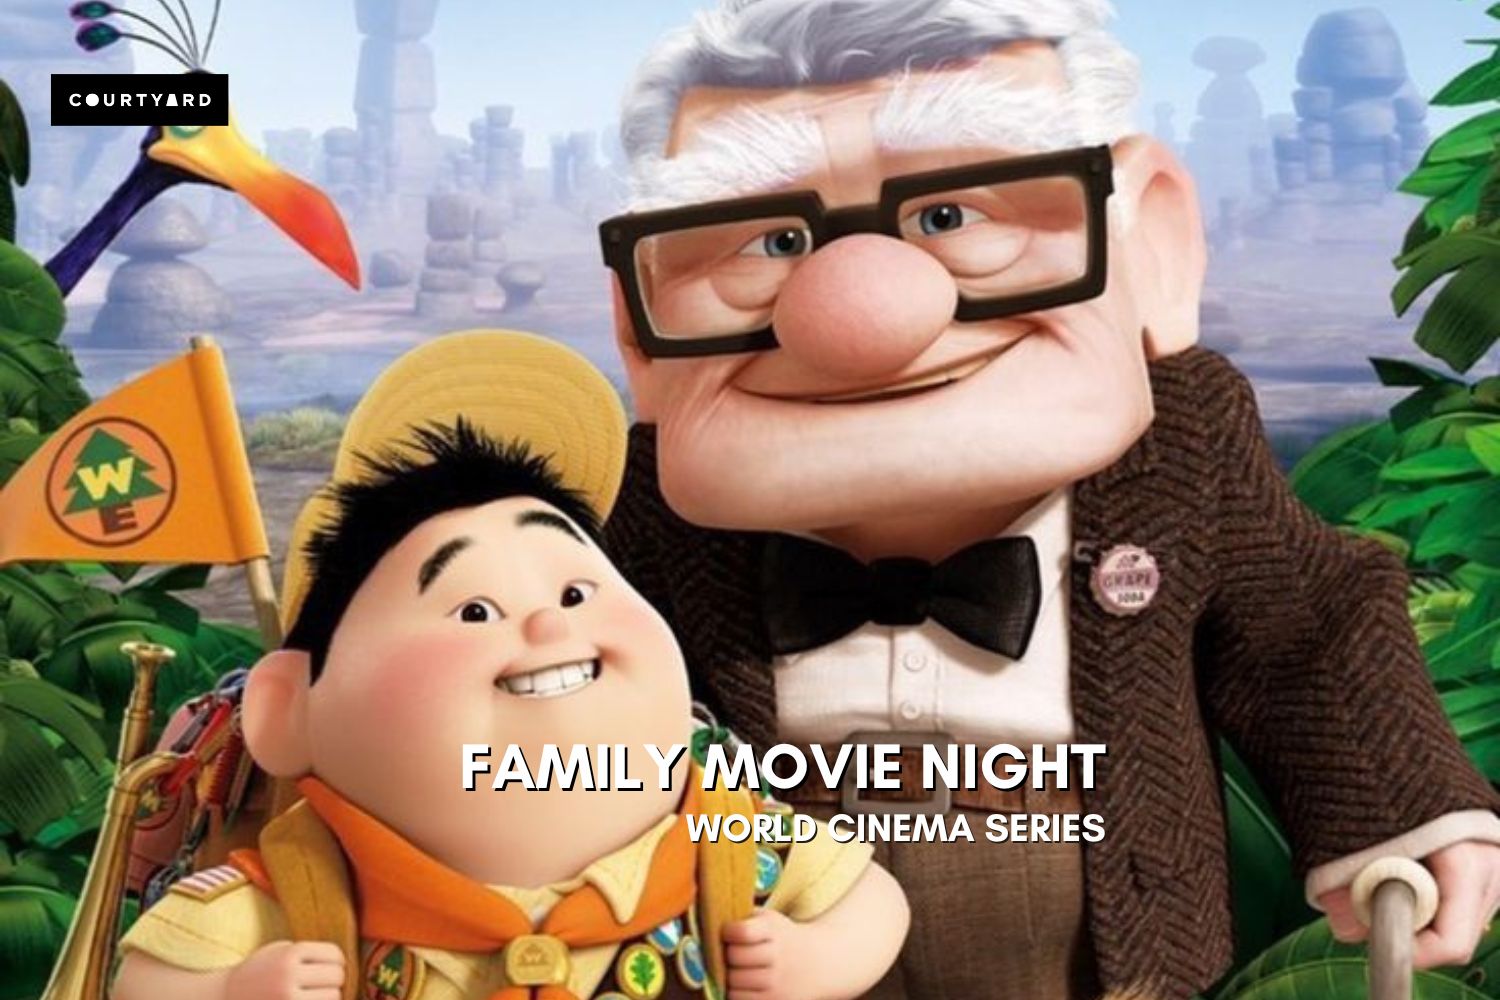 Family Movie Night, Courtyard Bangalore, Pixar's "UP" Screening